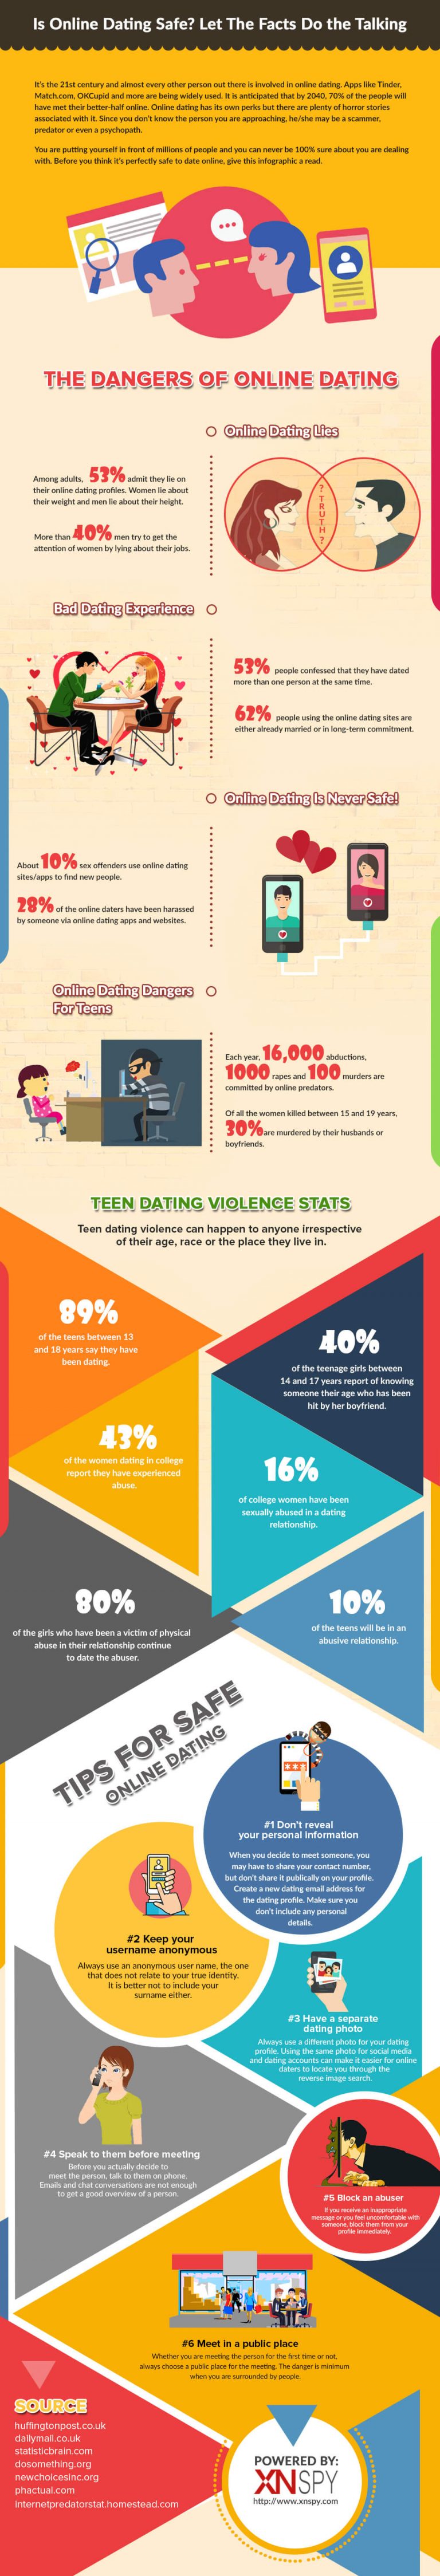 online dating predators statistics